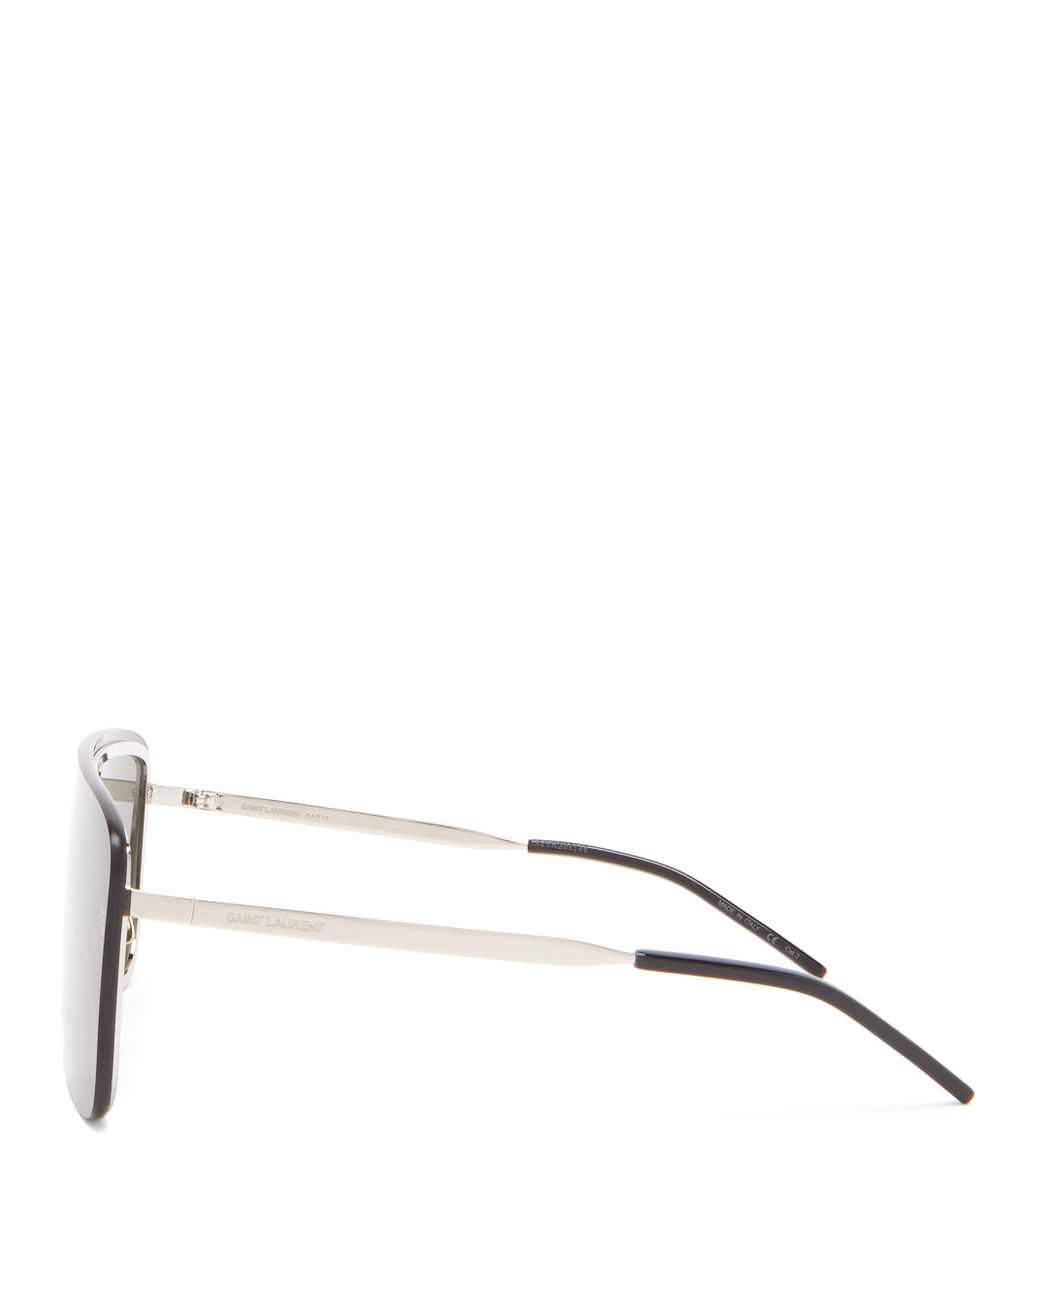 Saint Laurent Shield Tinted Sunglasses